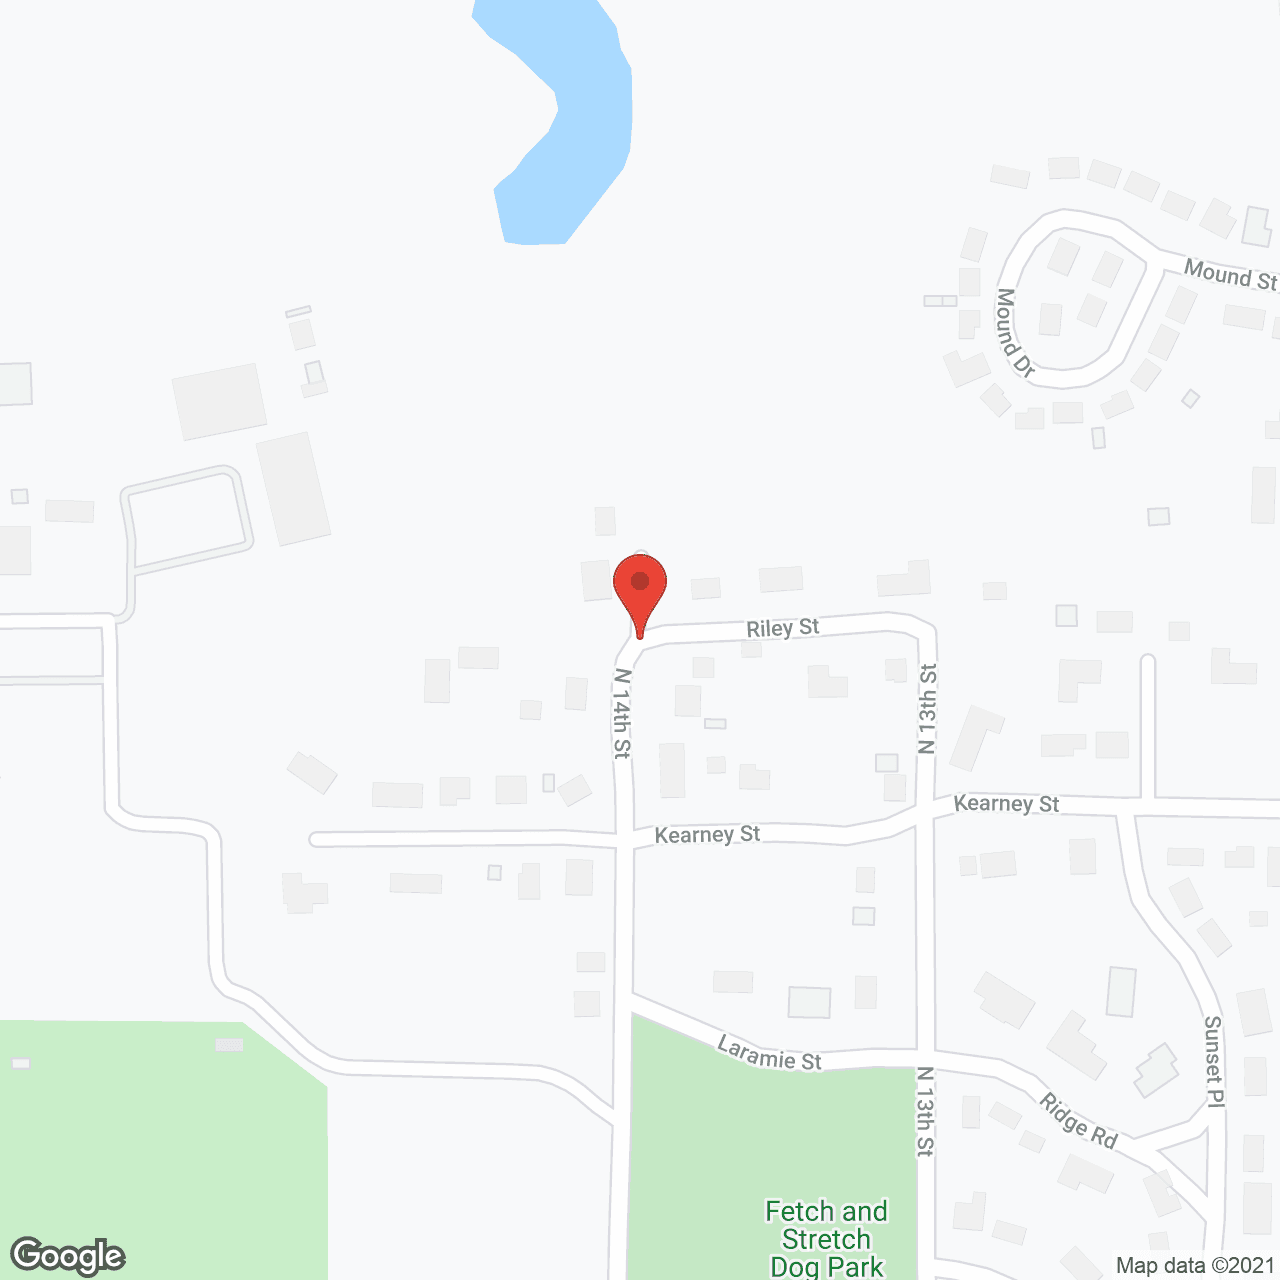 Gran Villas of Atchison in google map